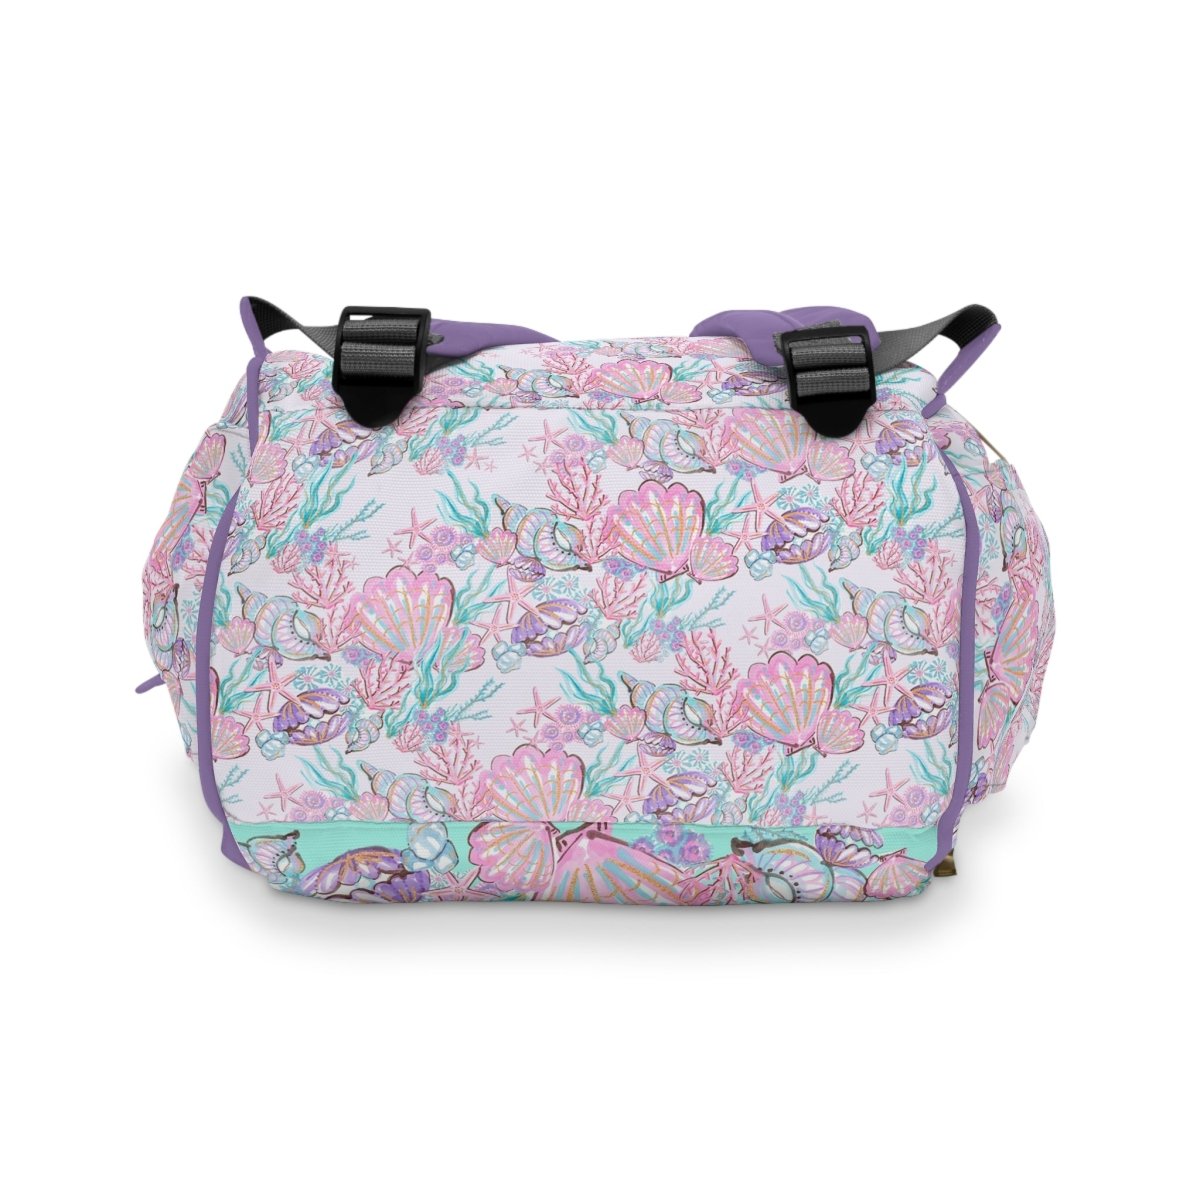 Mermaid Seashells Personalized Backpack Diaper Bag - gender_girl, Mermaid Seashells, text